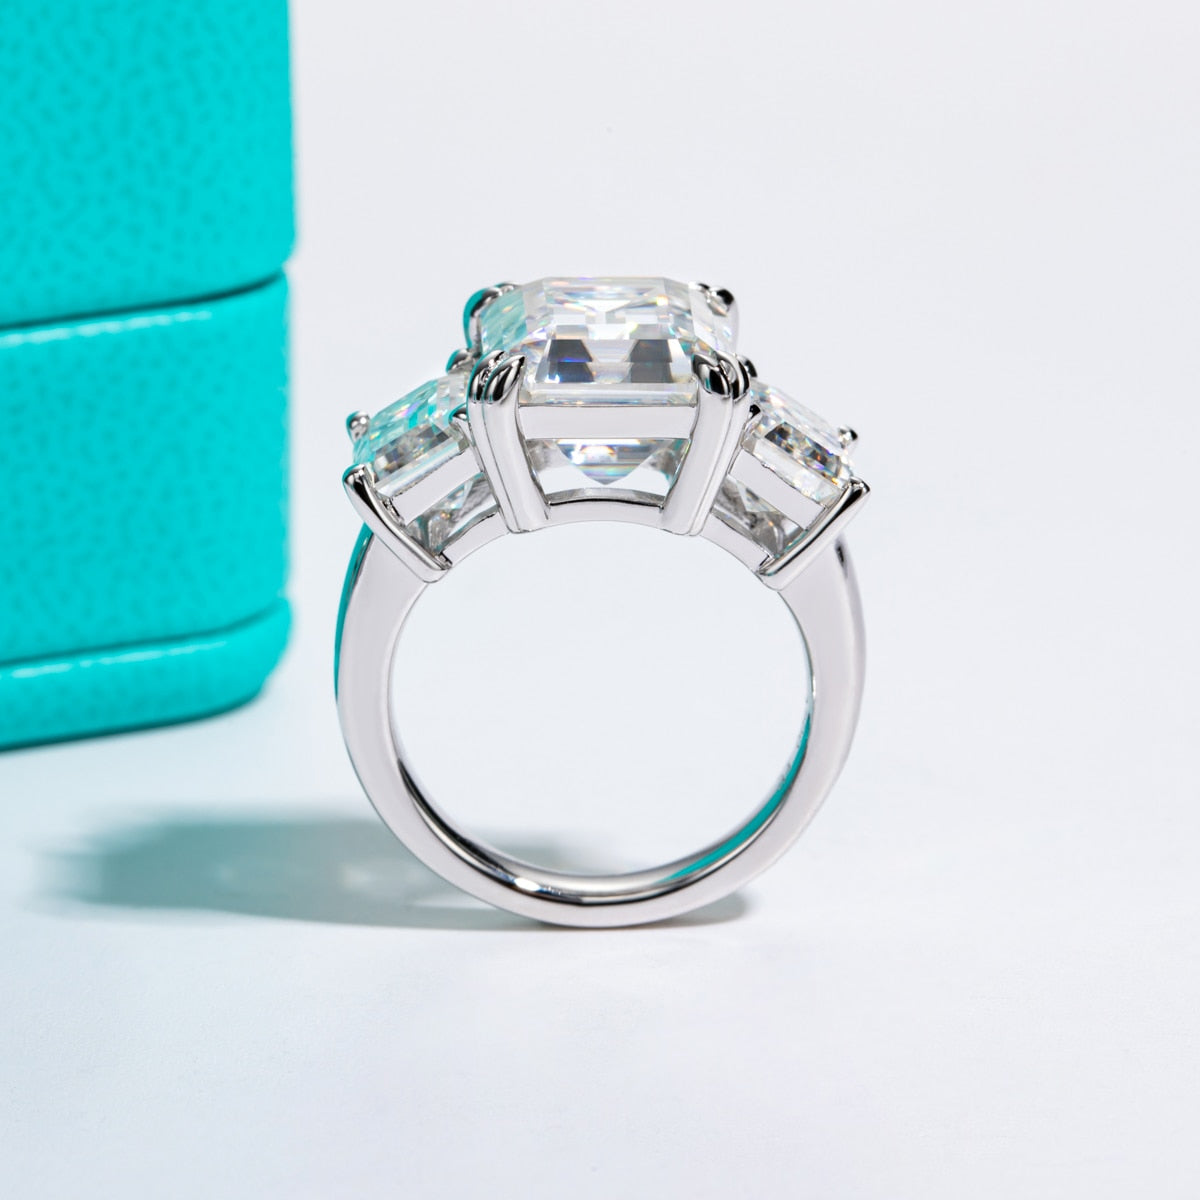 Luxury Engagement Rings. Emerald Cut. 12.0 Carat Genuine Moissanite. 3 Stones Rings.